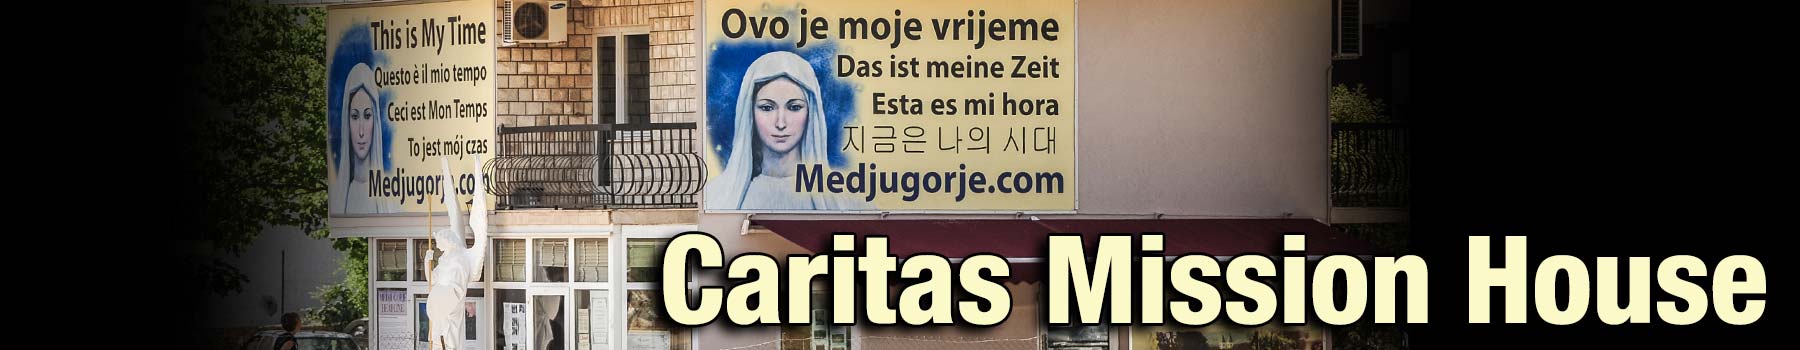 05-Caritas-Mission-House